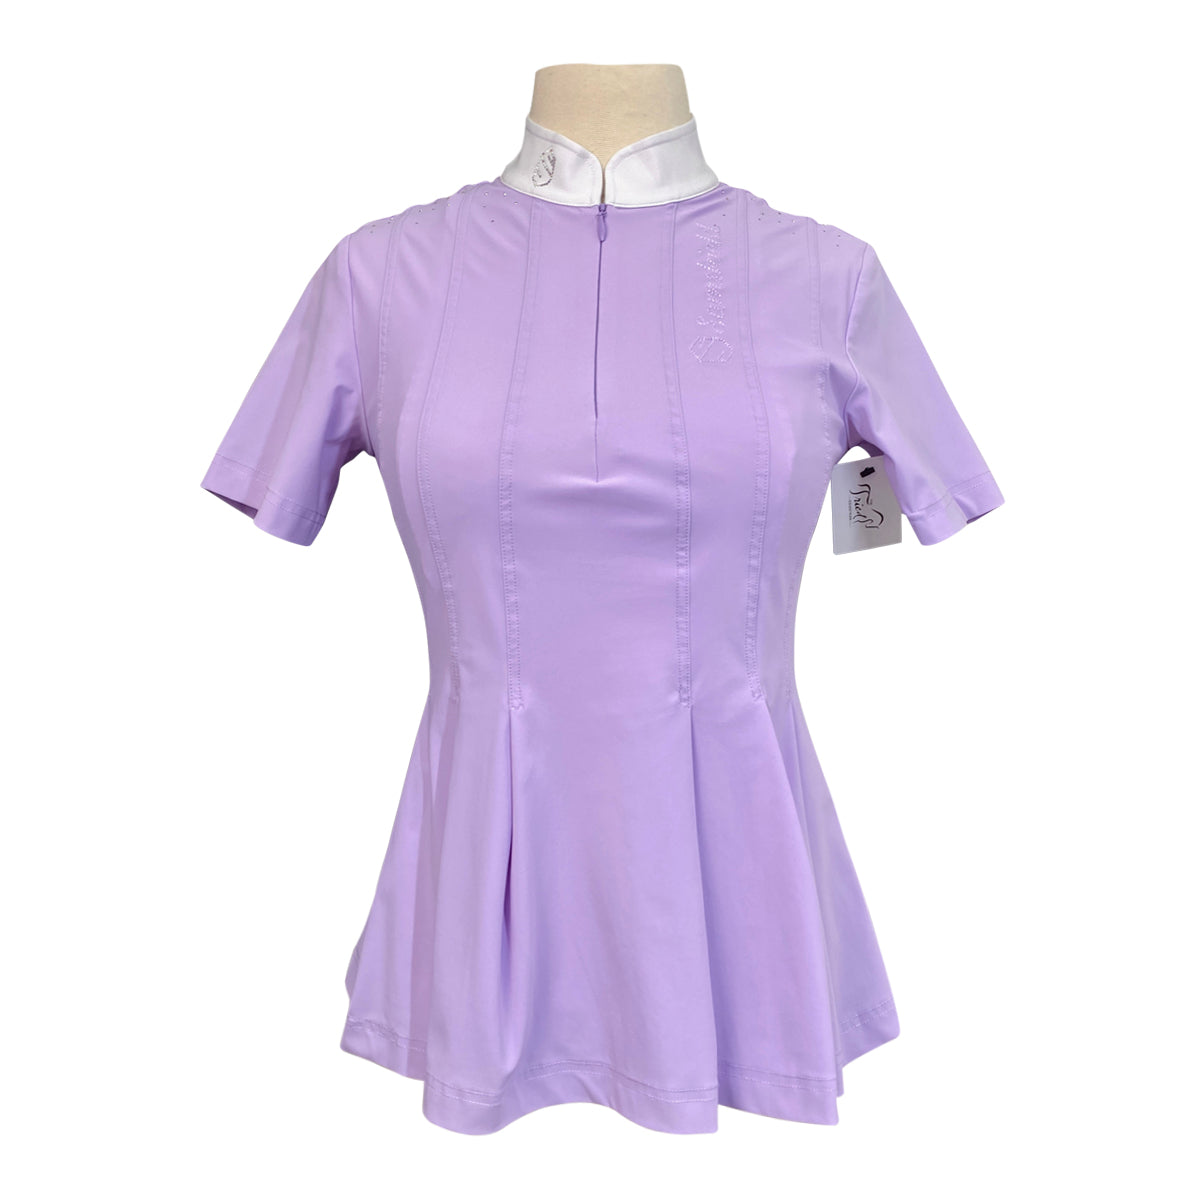 Samshield 'Ninon' Short-Sleeve Shirt in Lilac